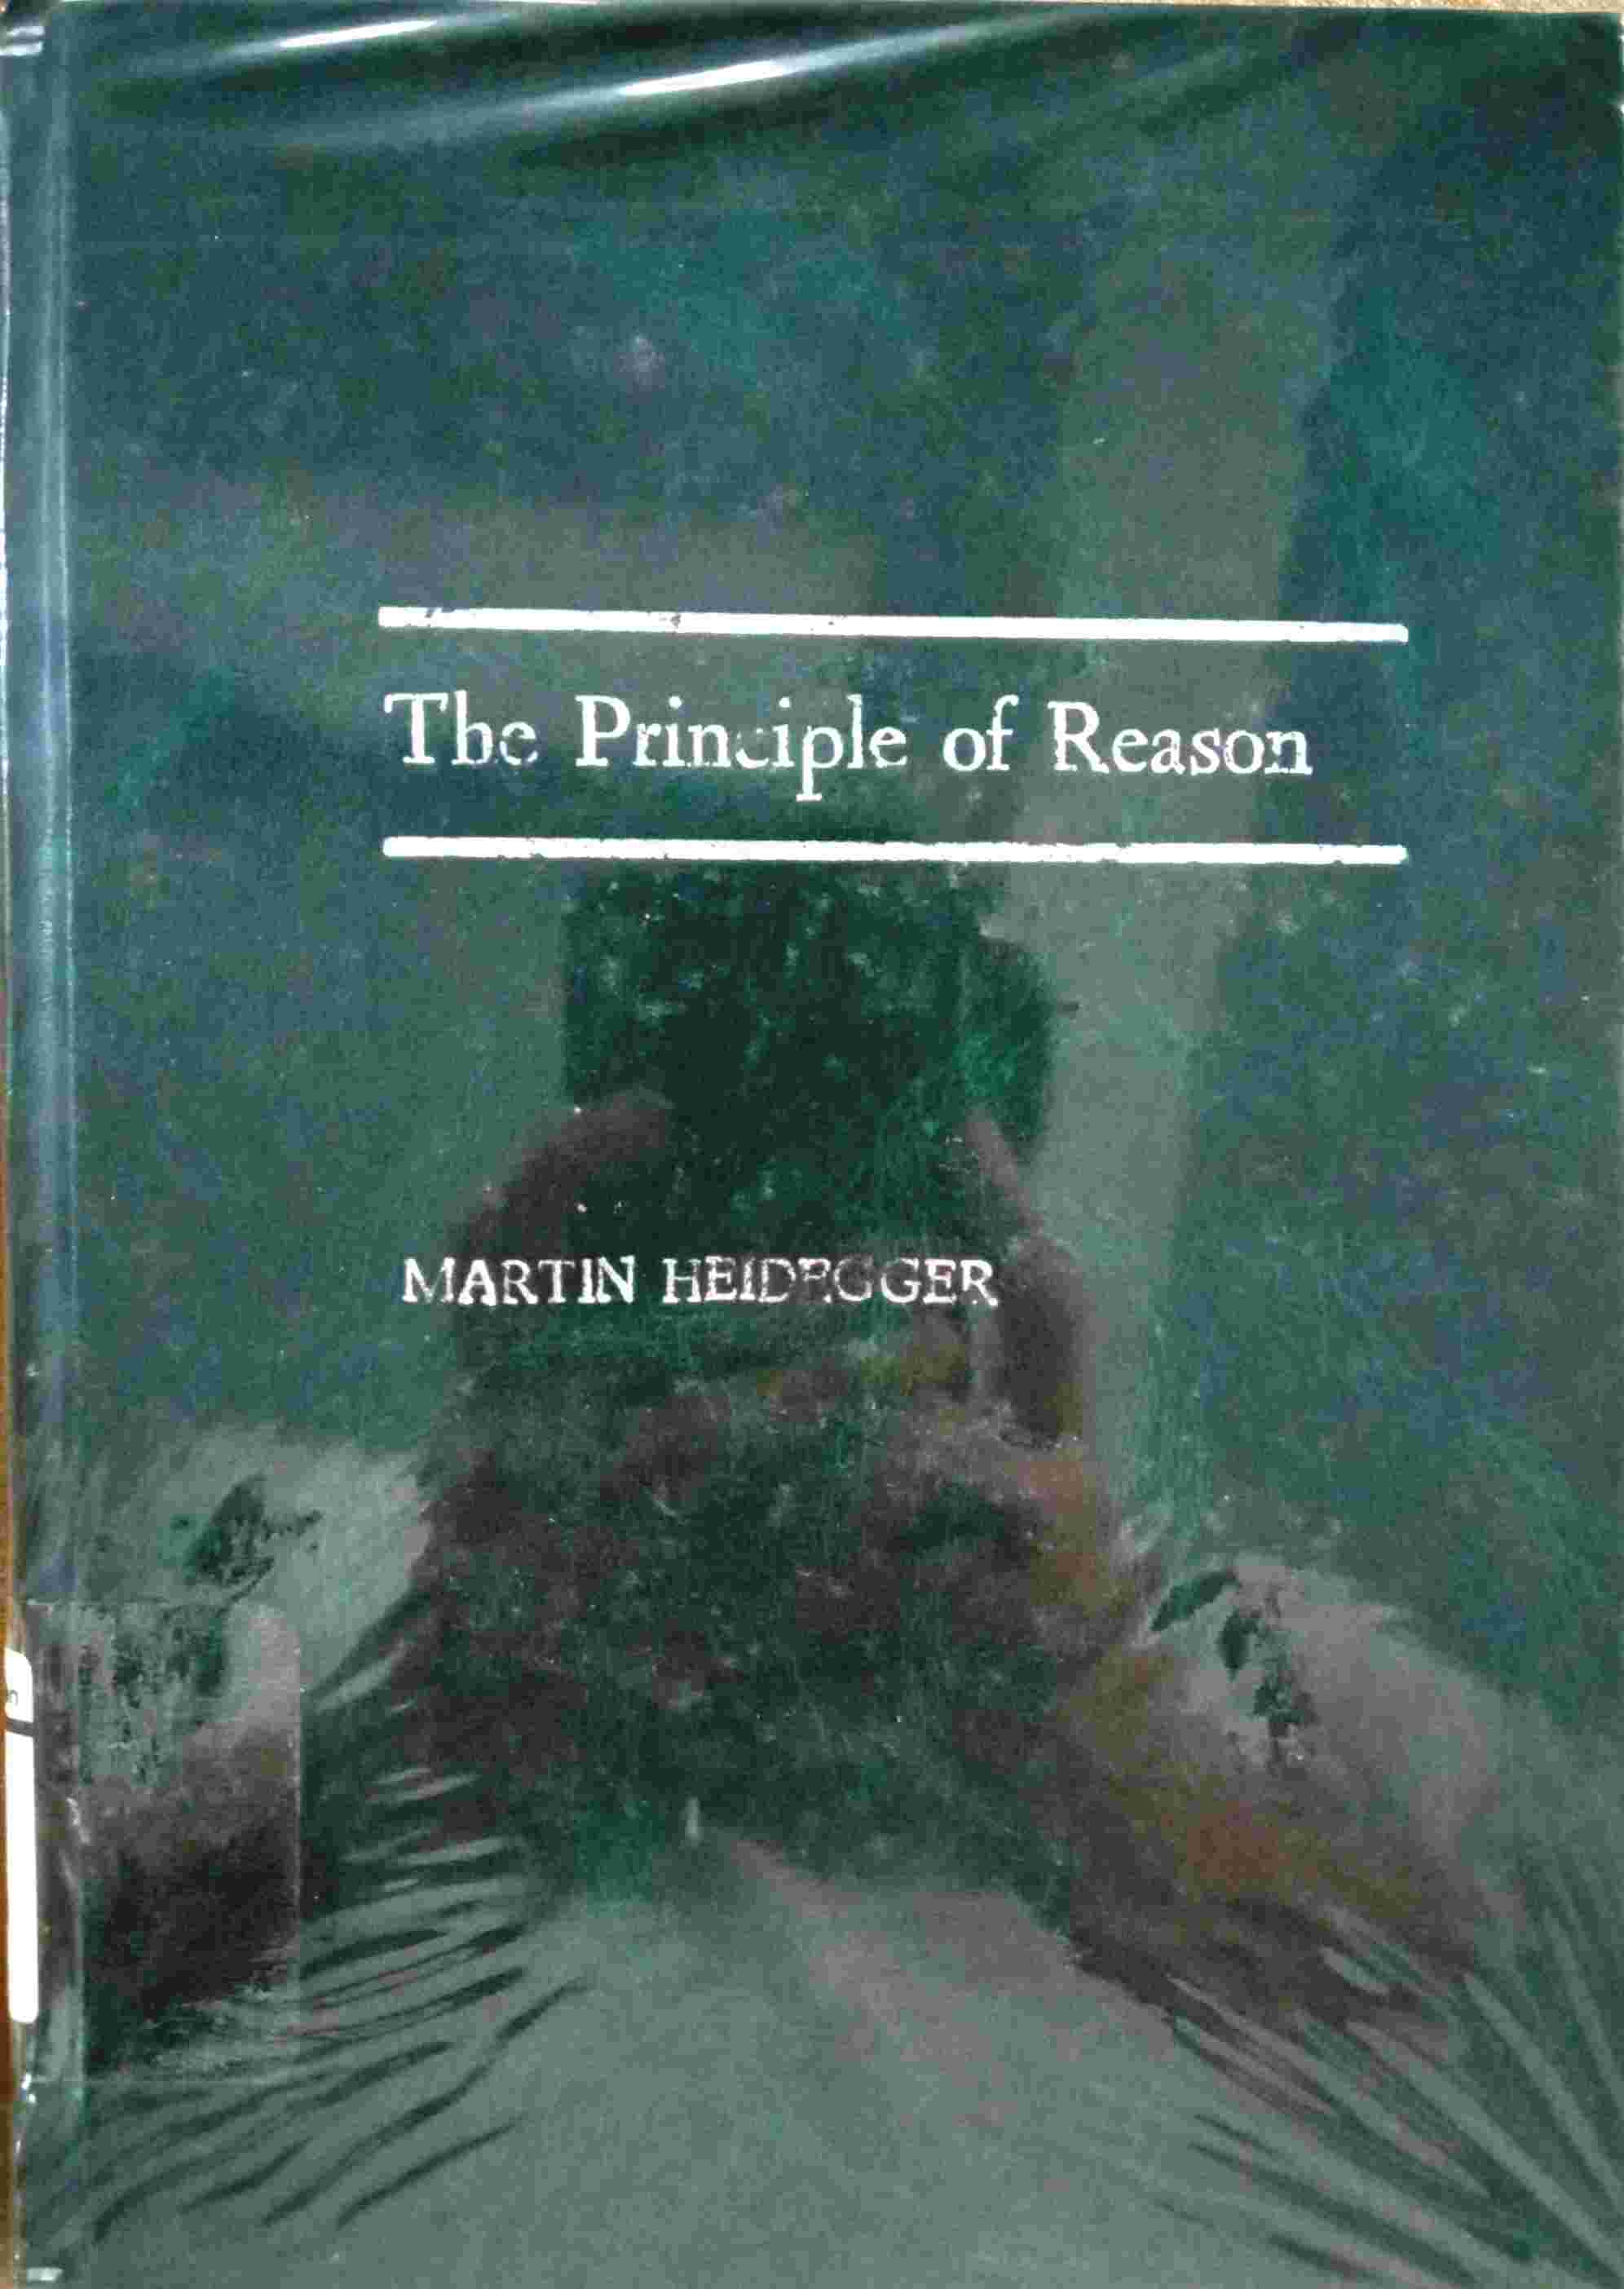 THE PRINCIPLE OF REASON